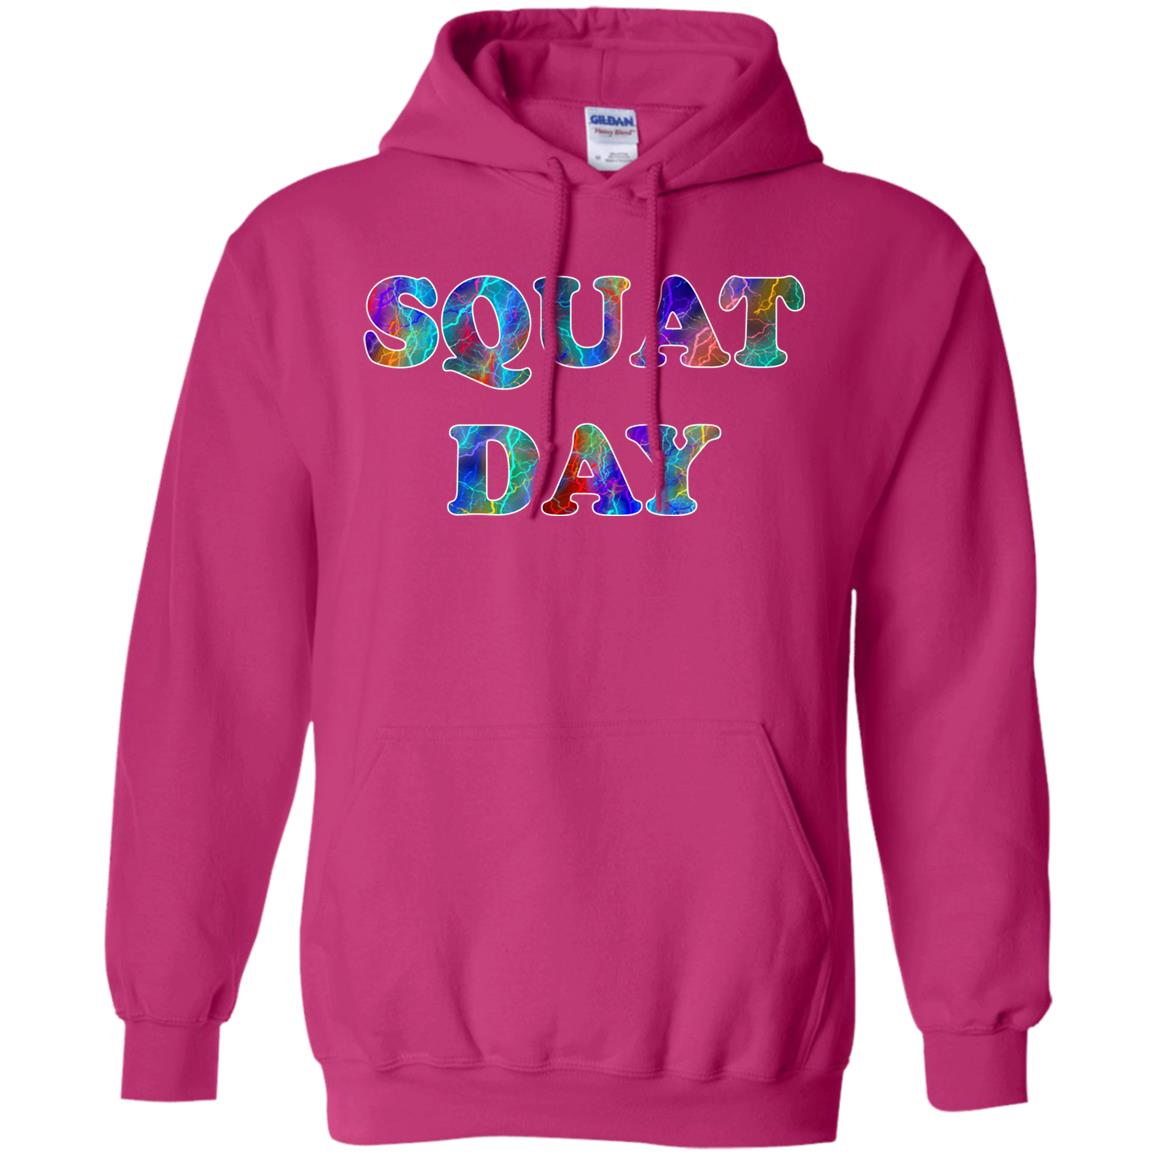 Squat Day Sport Hoodie